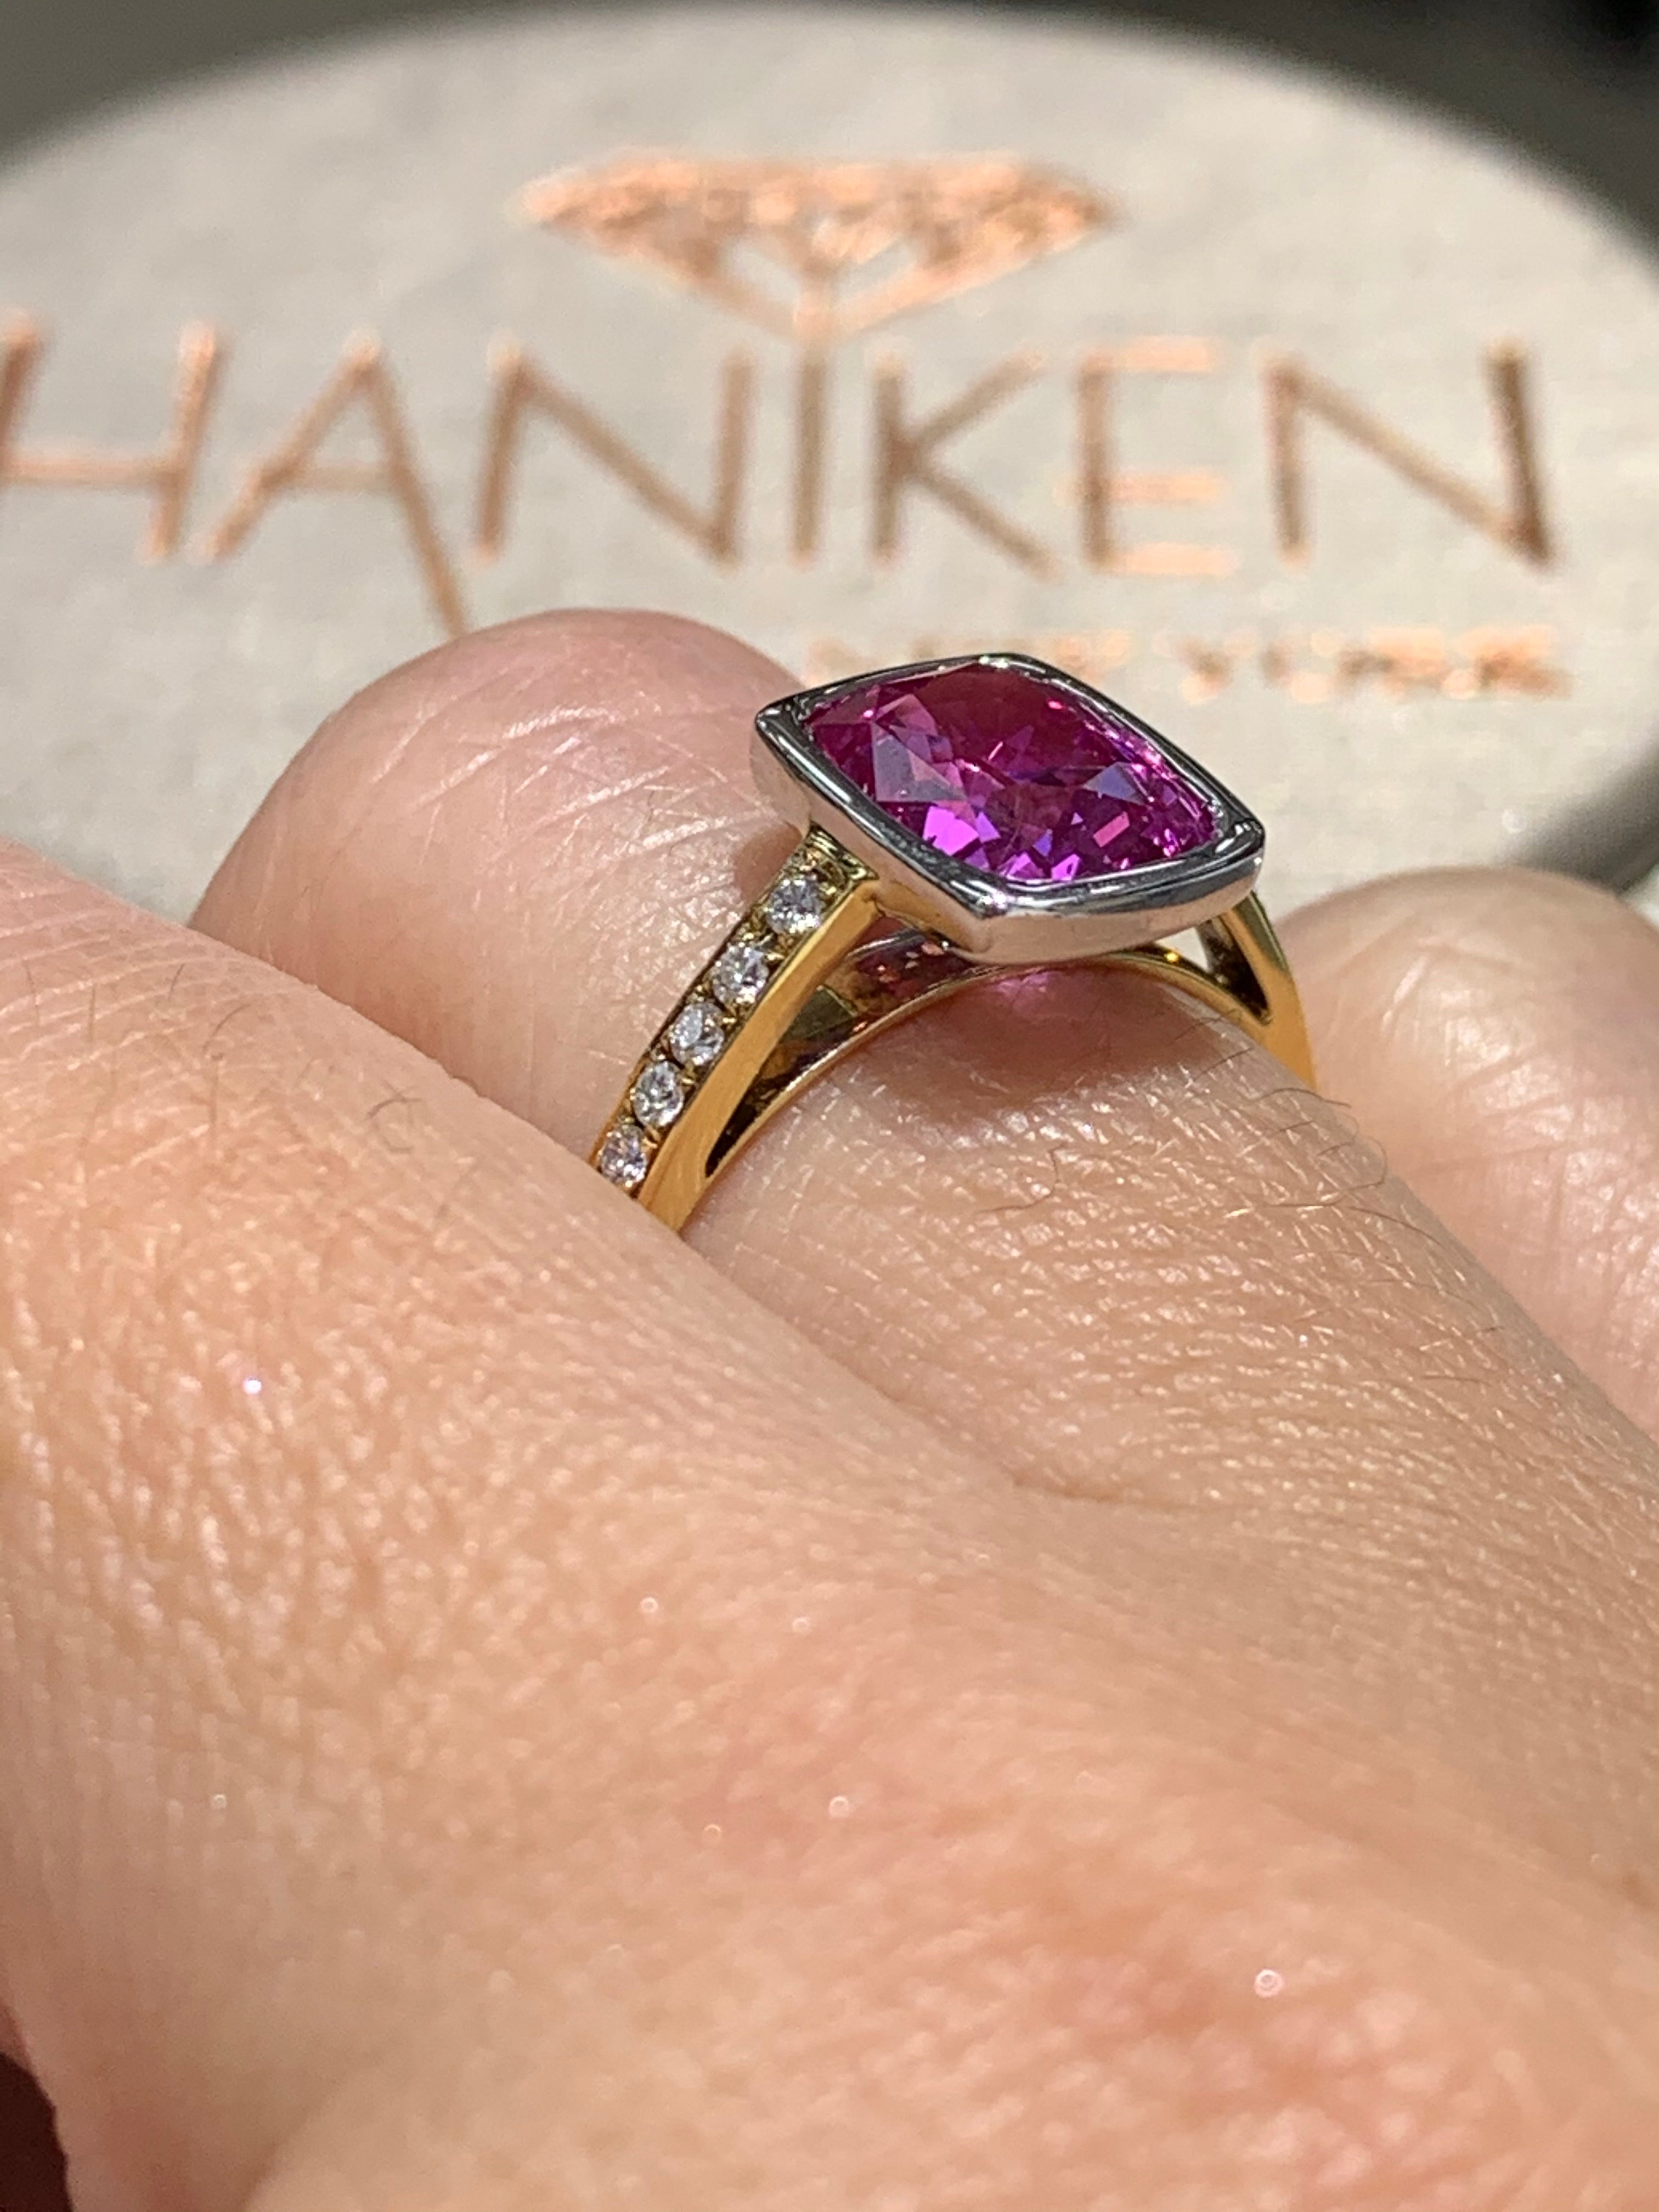 Pink Sapphire 2.84ct and Diamond Cocktail Ring - HANIKEN JEWELERS NEW-YORK